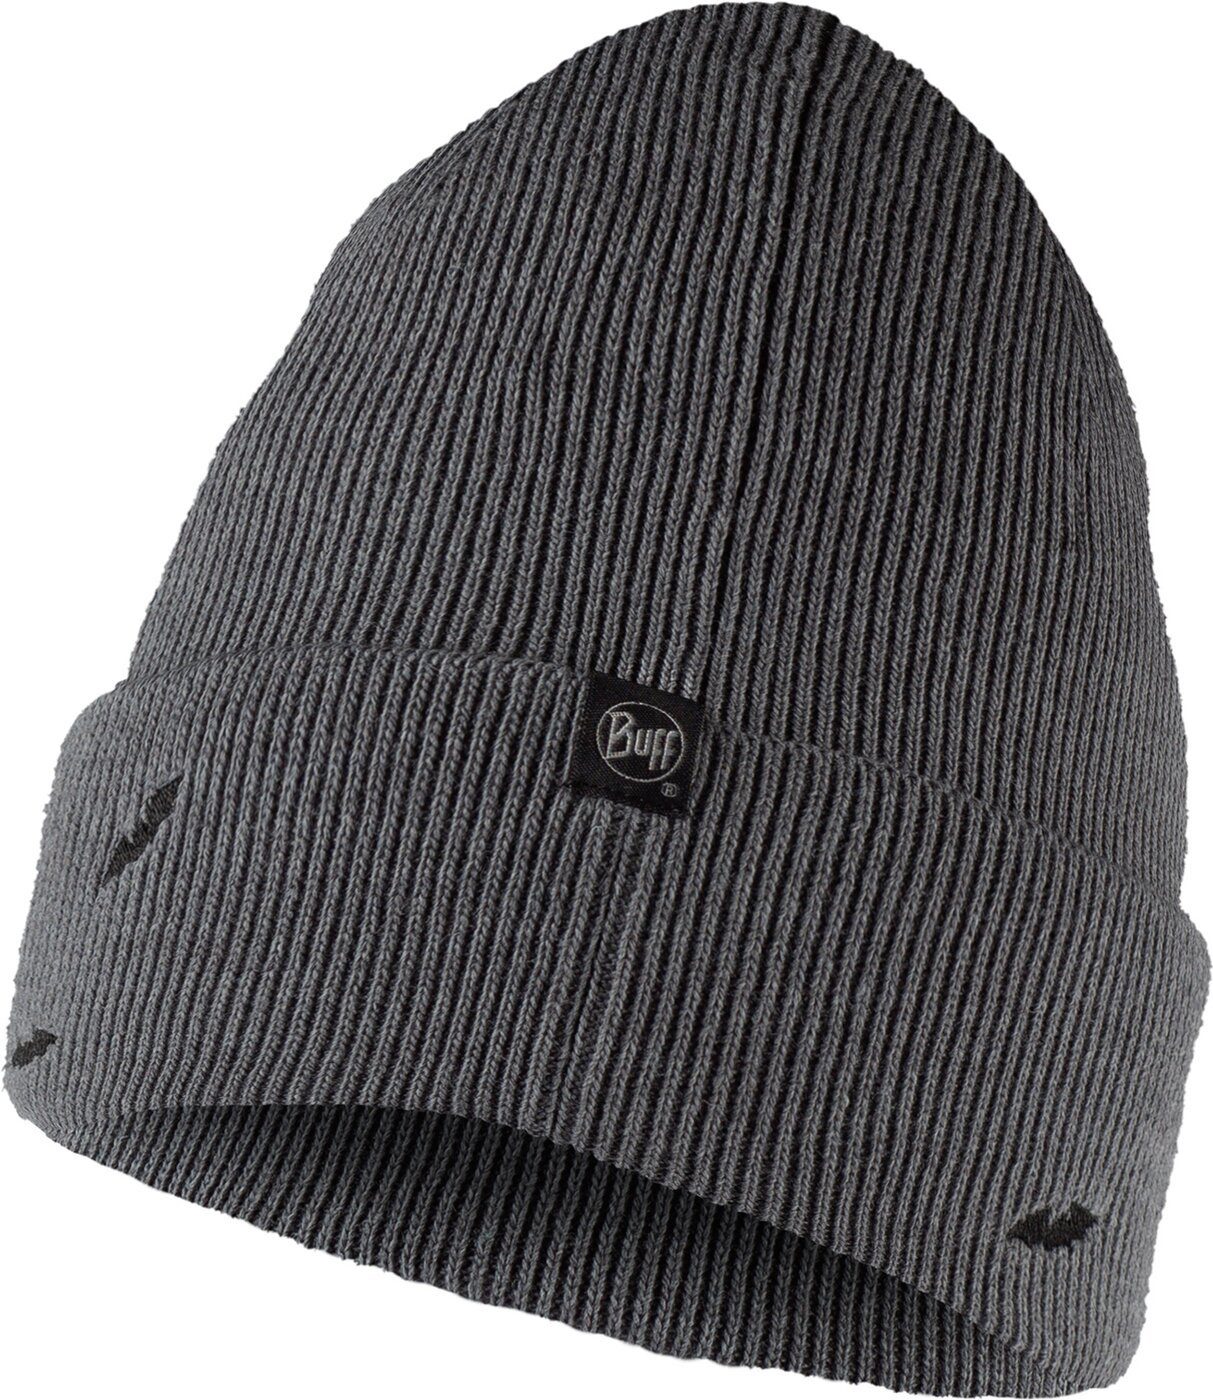 Buff Beanie Knitted Hat grey